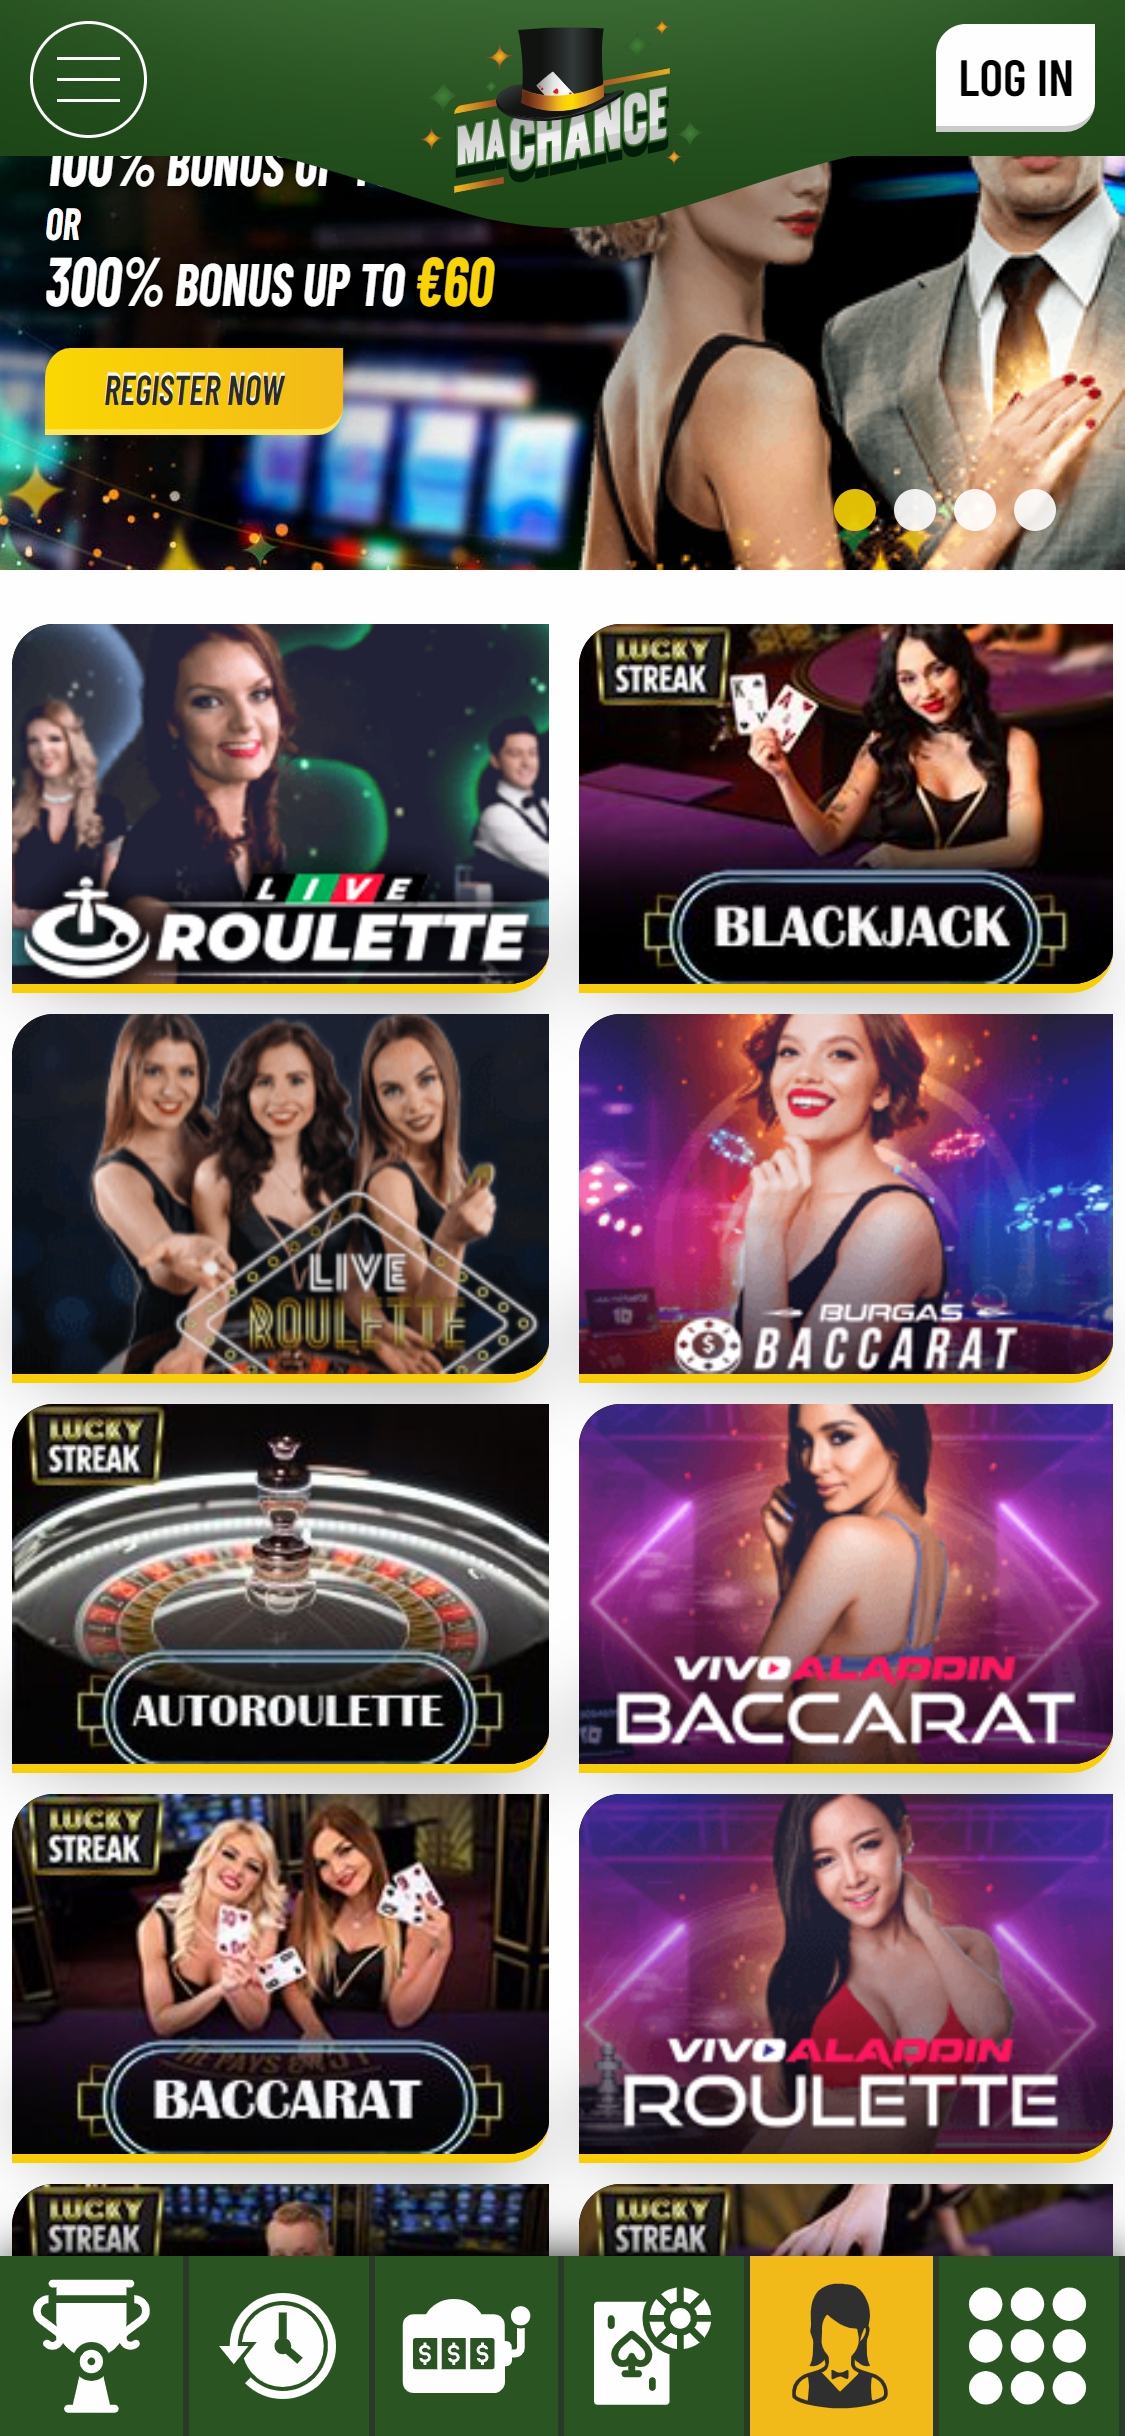 MaChance Casino Mobile Live Dealer Games Review